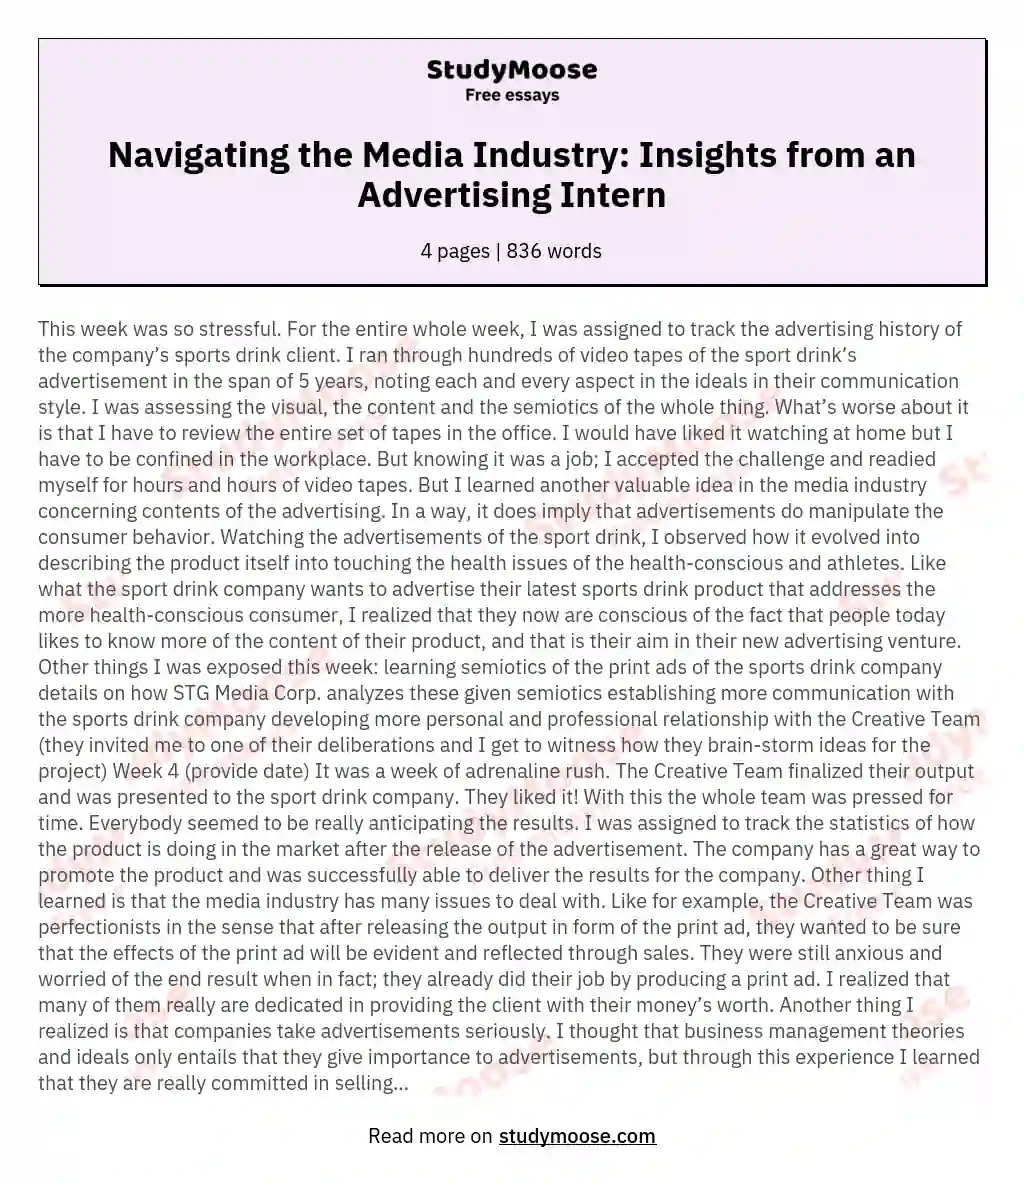 Navigating the Media Industry: Insights from an Advertising Intern essay